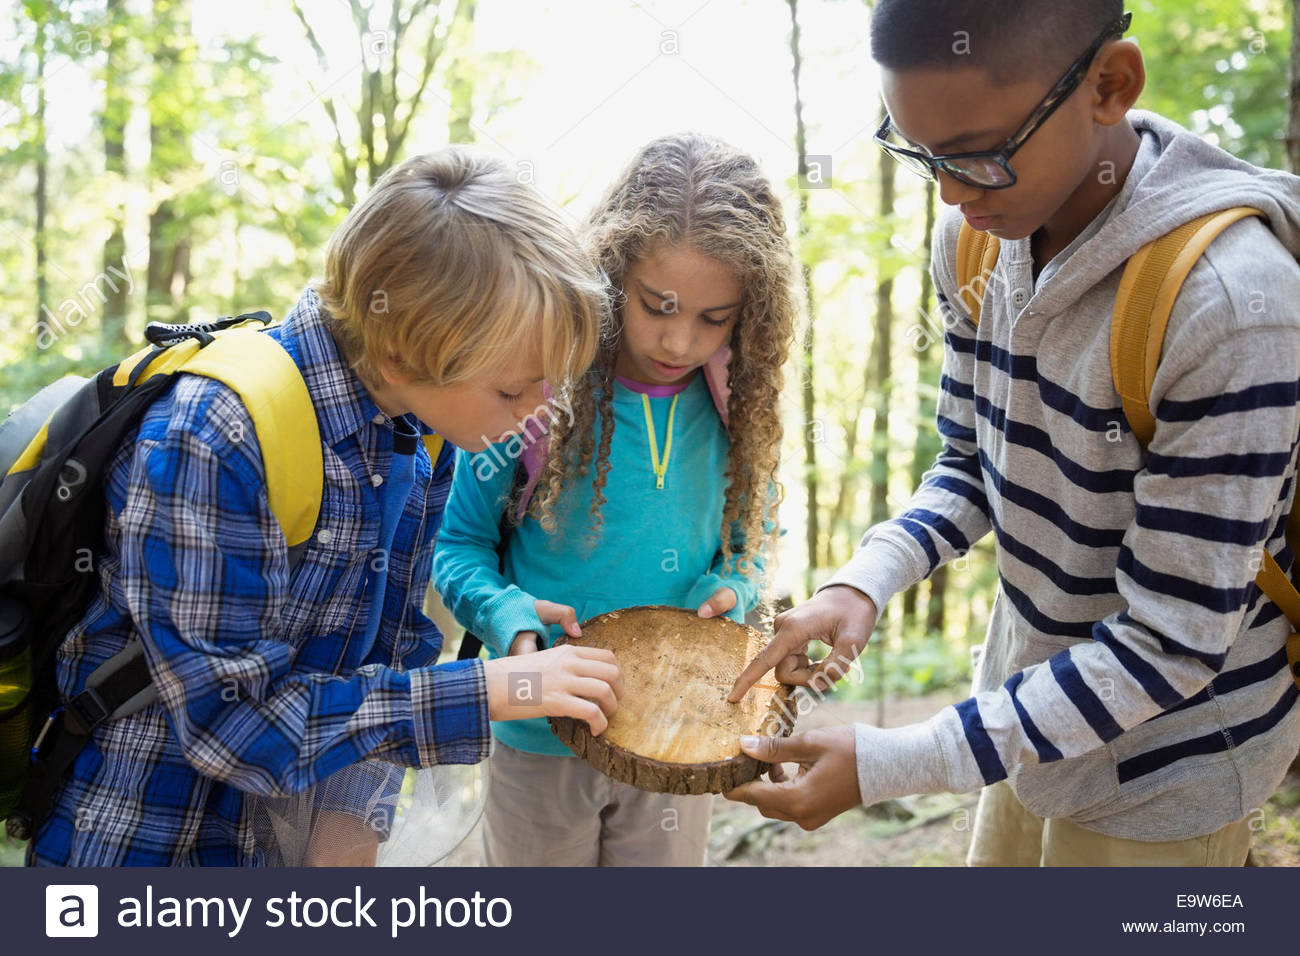 Children examining piece of tree in woods Stock Photo